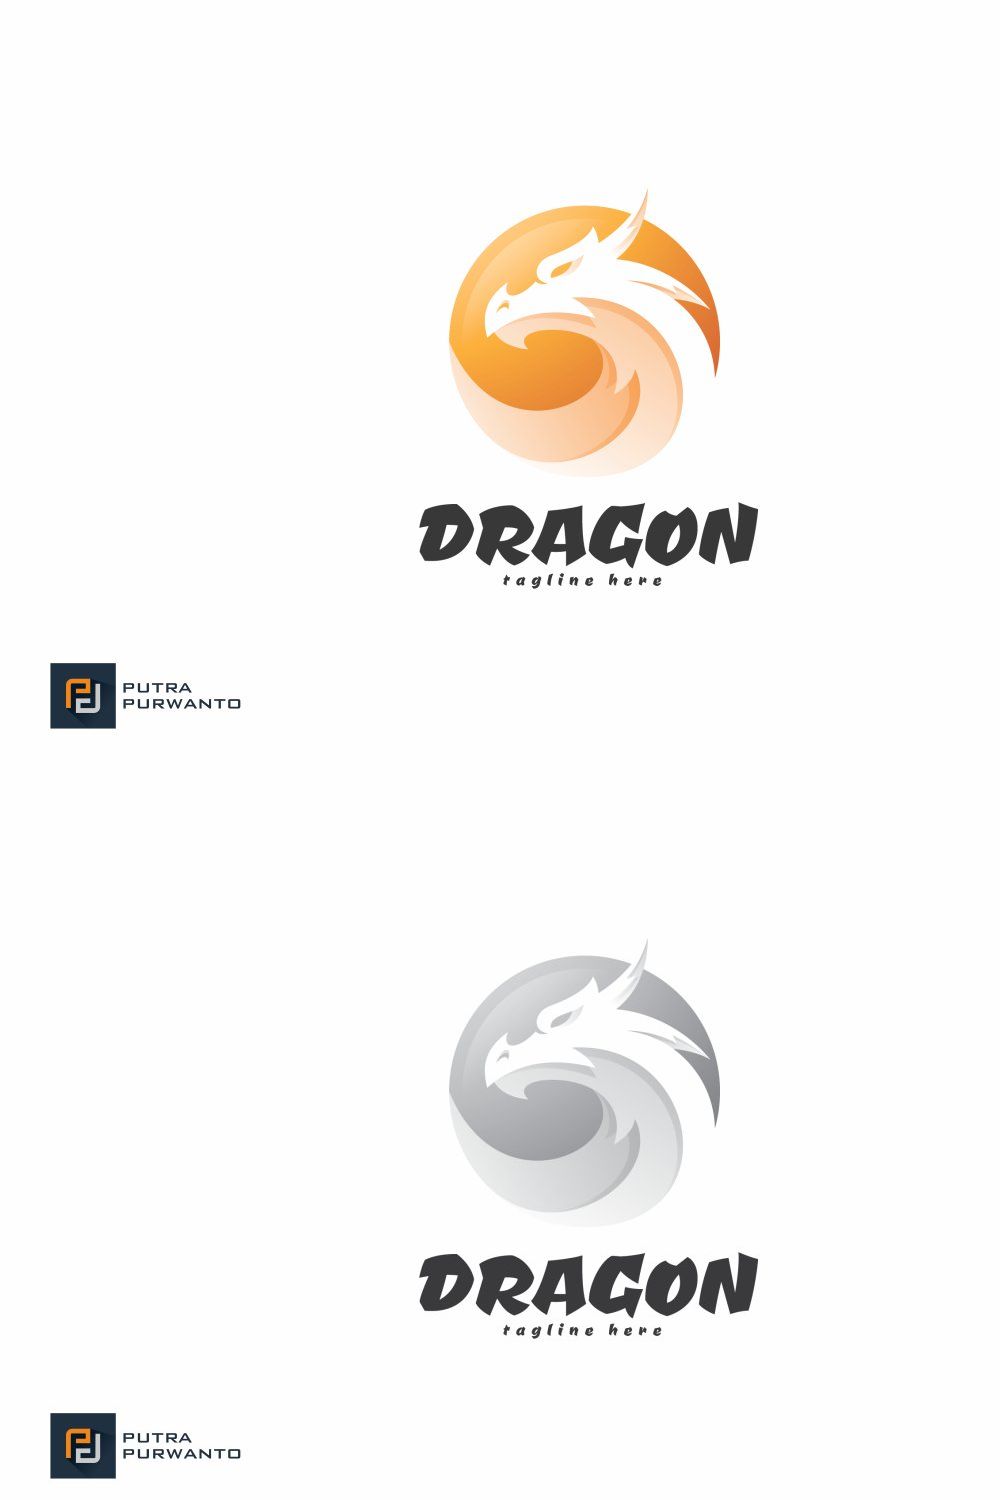 Dragon - Logo Template pinterest preview image.